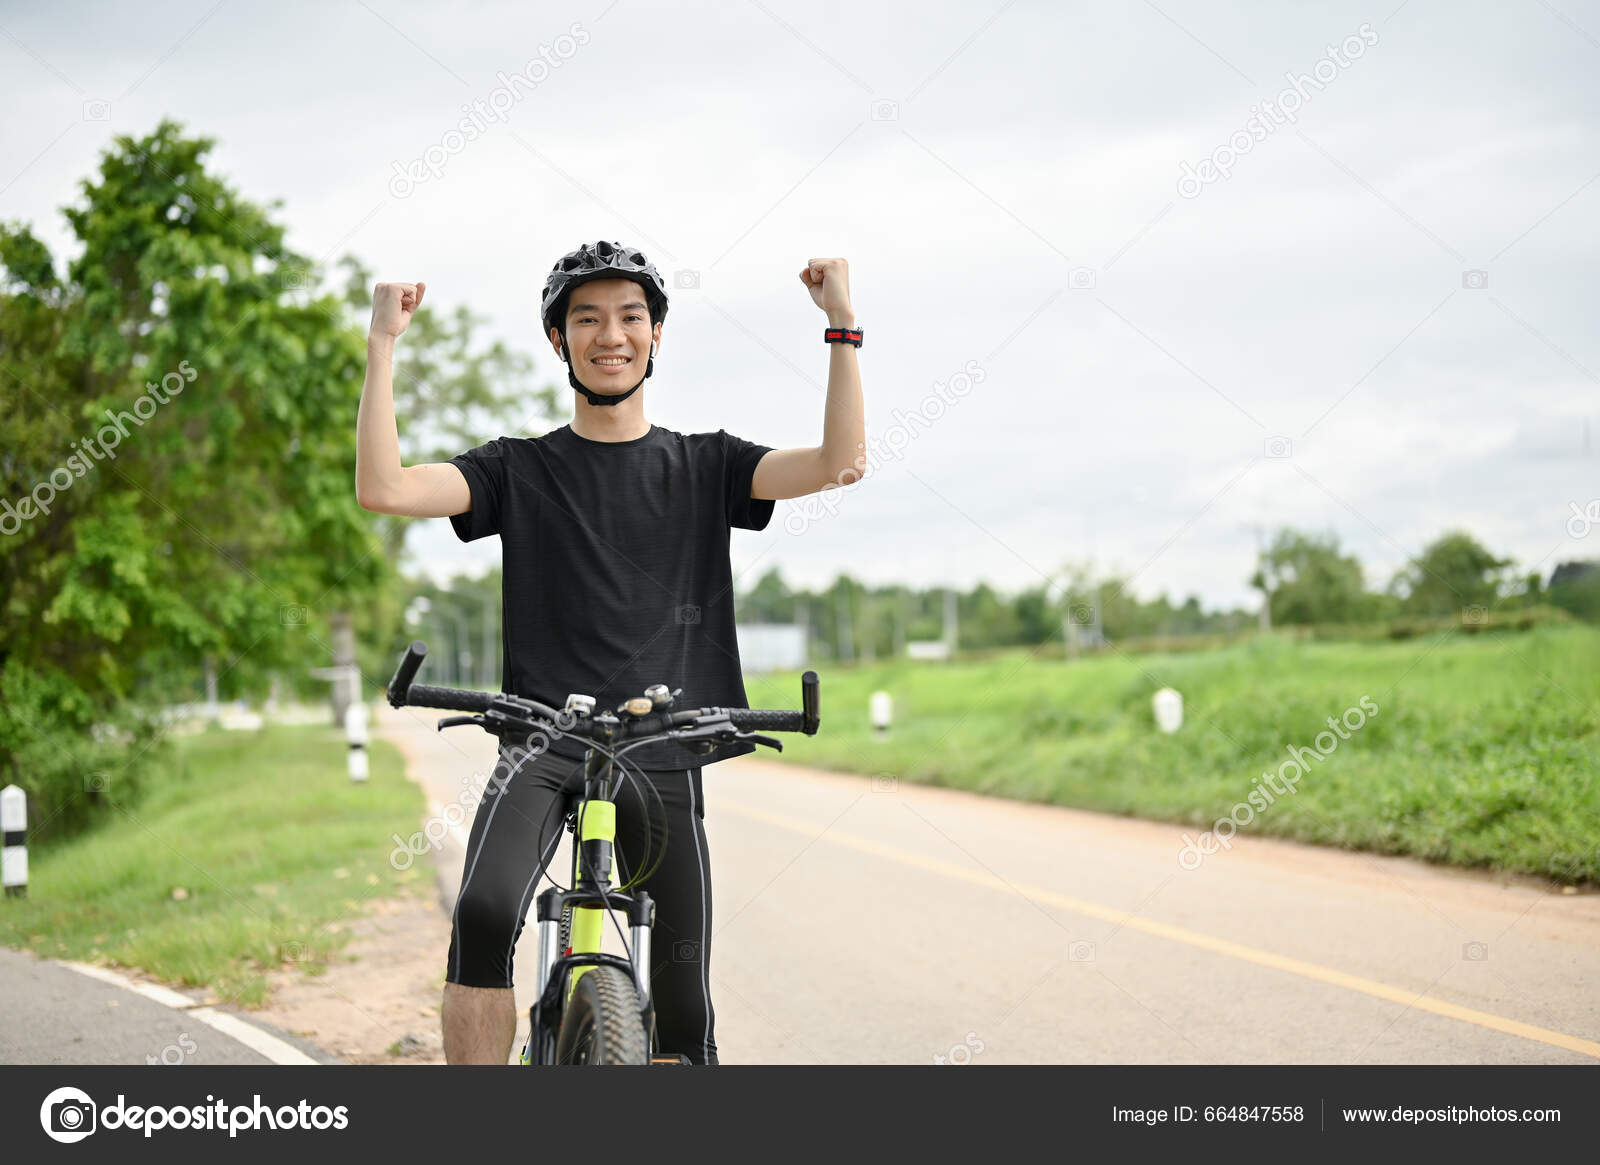 https://st5.depositphotos.com/27518956/66484/i/1600/depositphotos_664847558-stock-photo-happy-asian-man-sportswear-bike.jpg